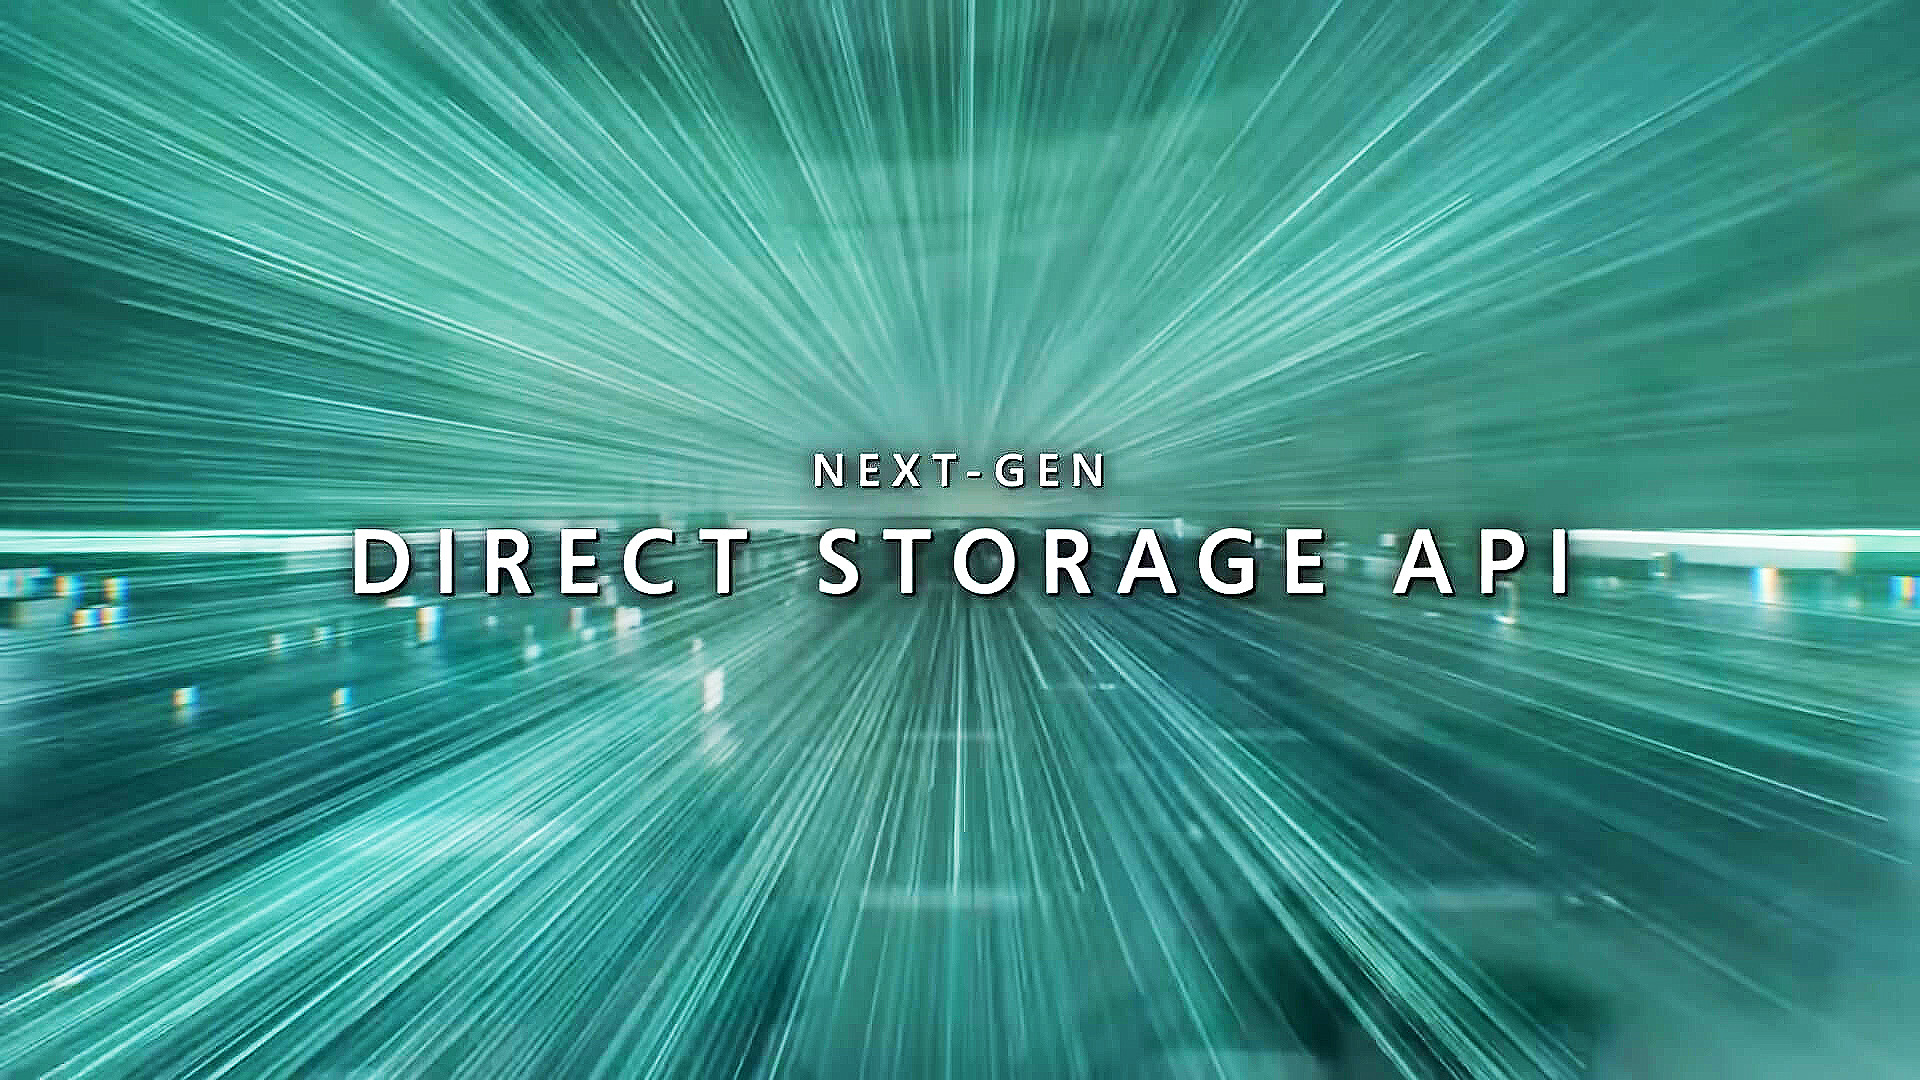 Direct Storage 1.1